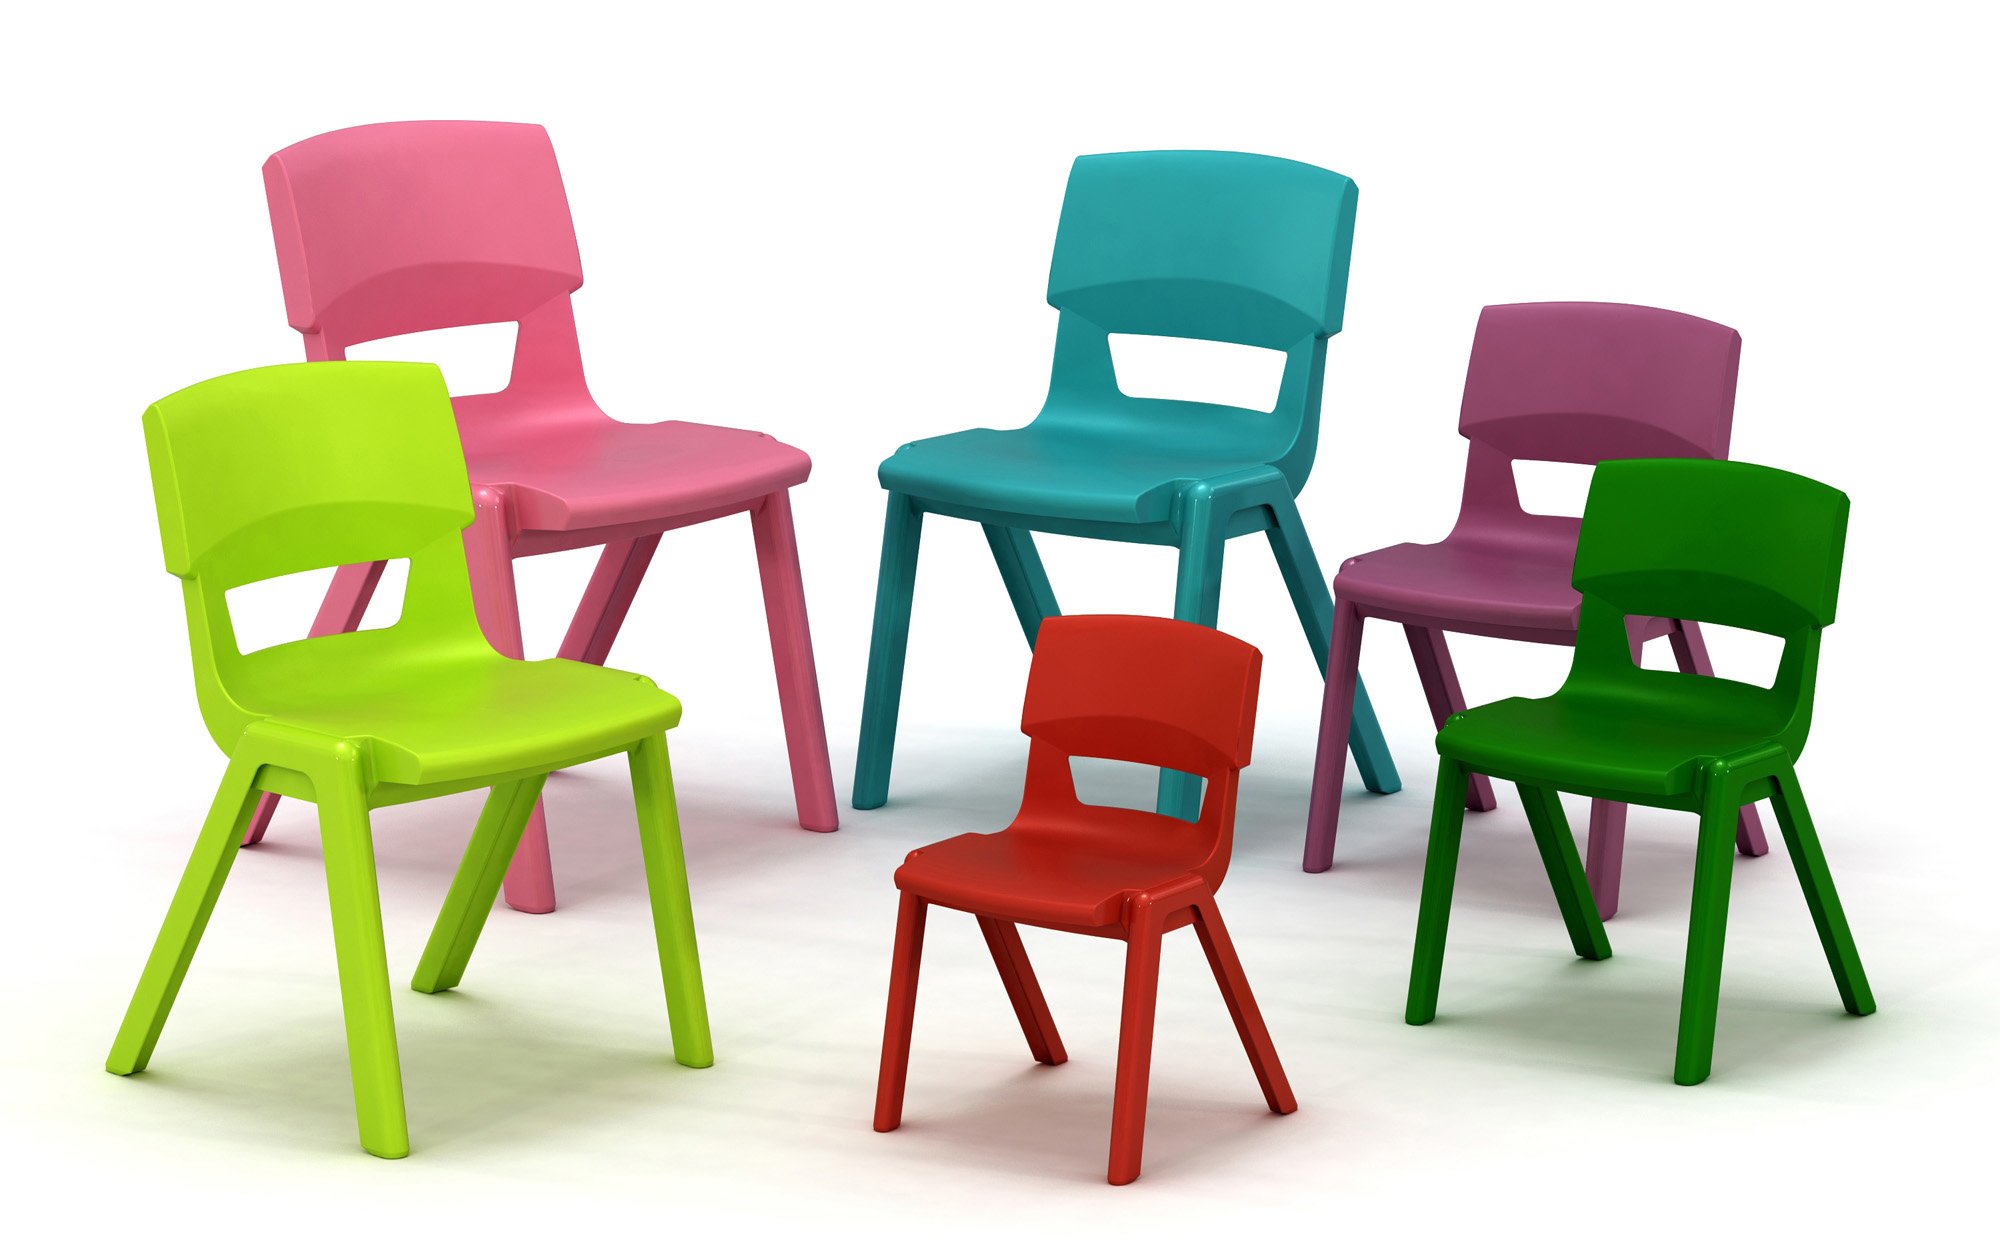 Mono Posture Chairs